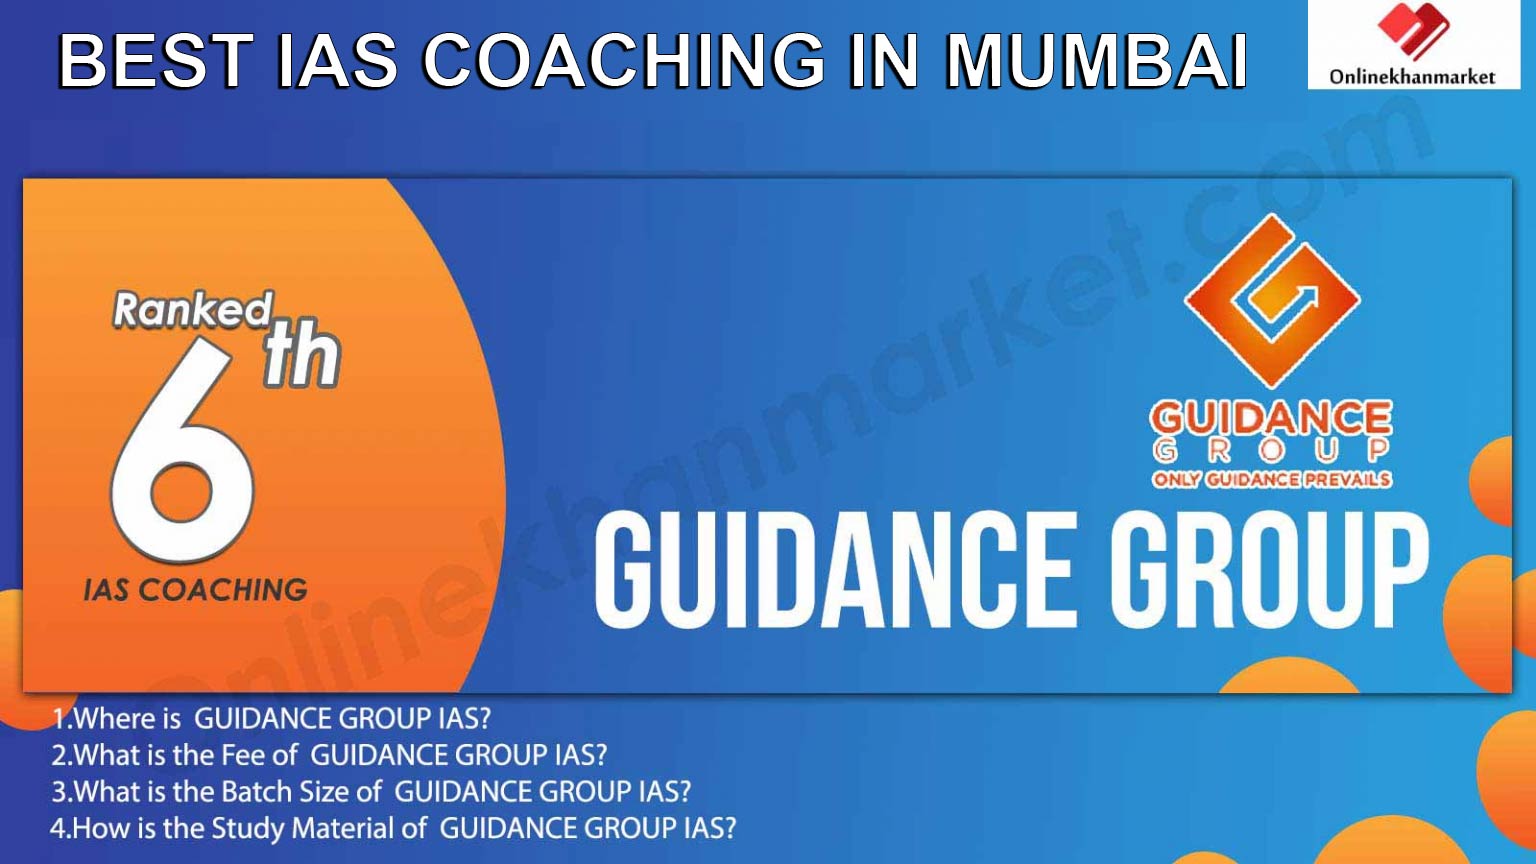 Best IAS Coaching in Mumbai